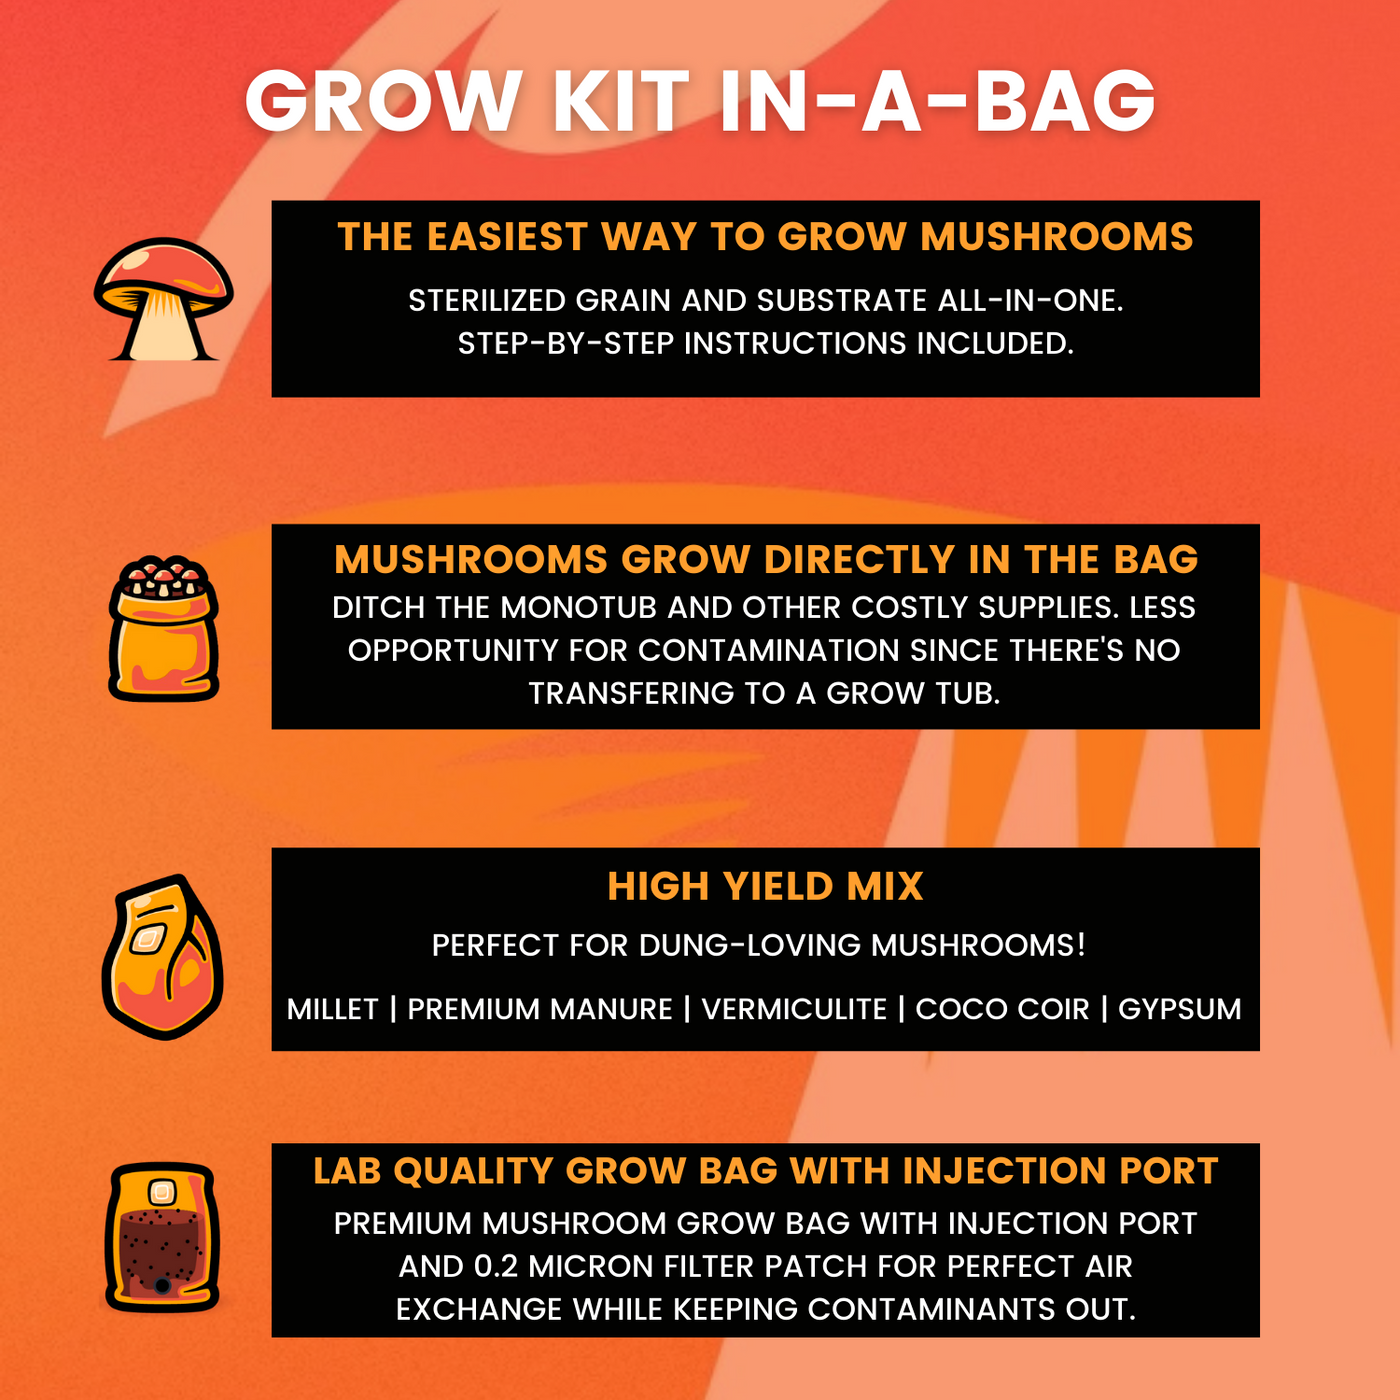 Mushroom Grow Kit in a Bag - Lab Quality grow bag